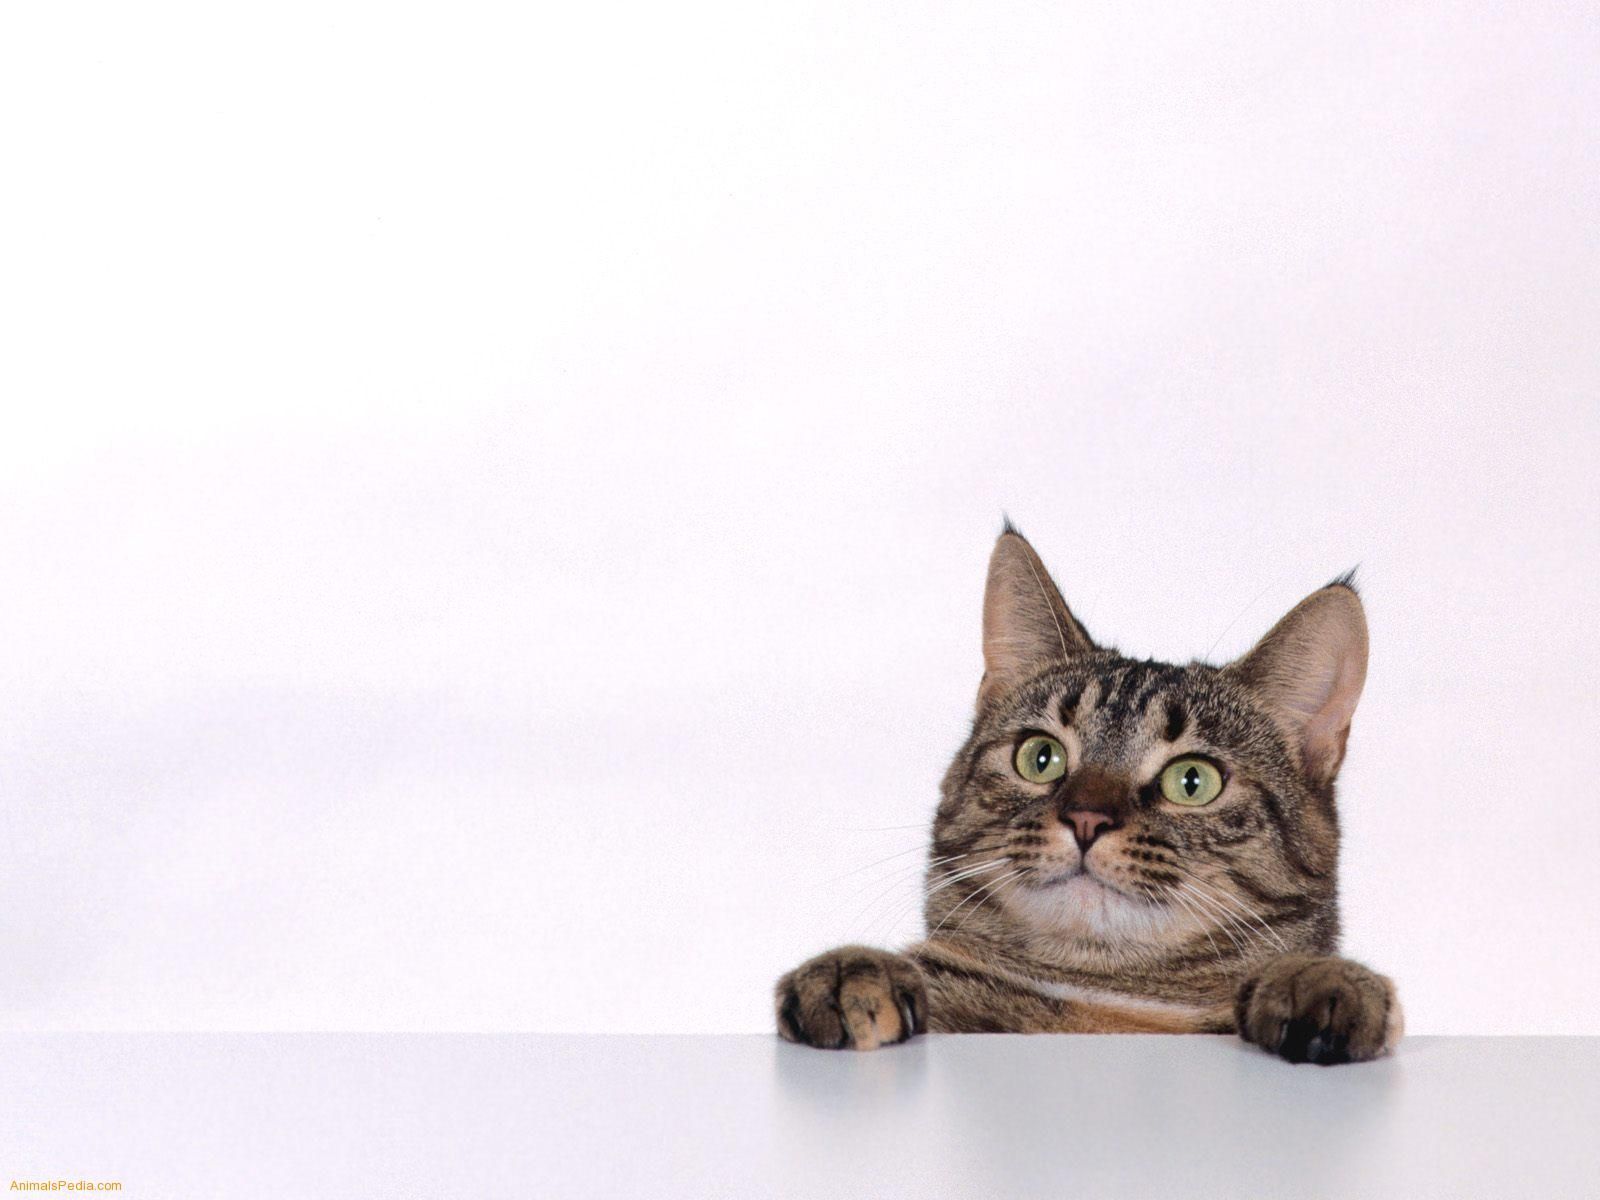 Mister Curiosity Tabby Mix wallpaper. Cat wallpaper, Cute cat wallpaper, Cats